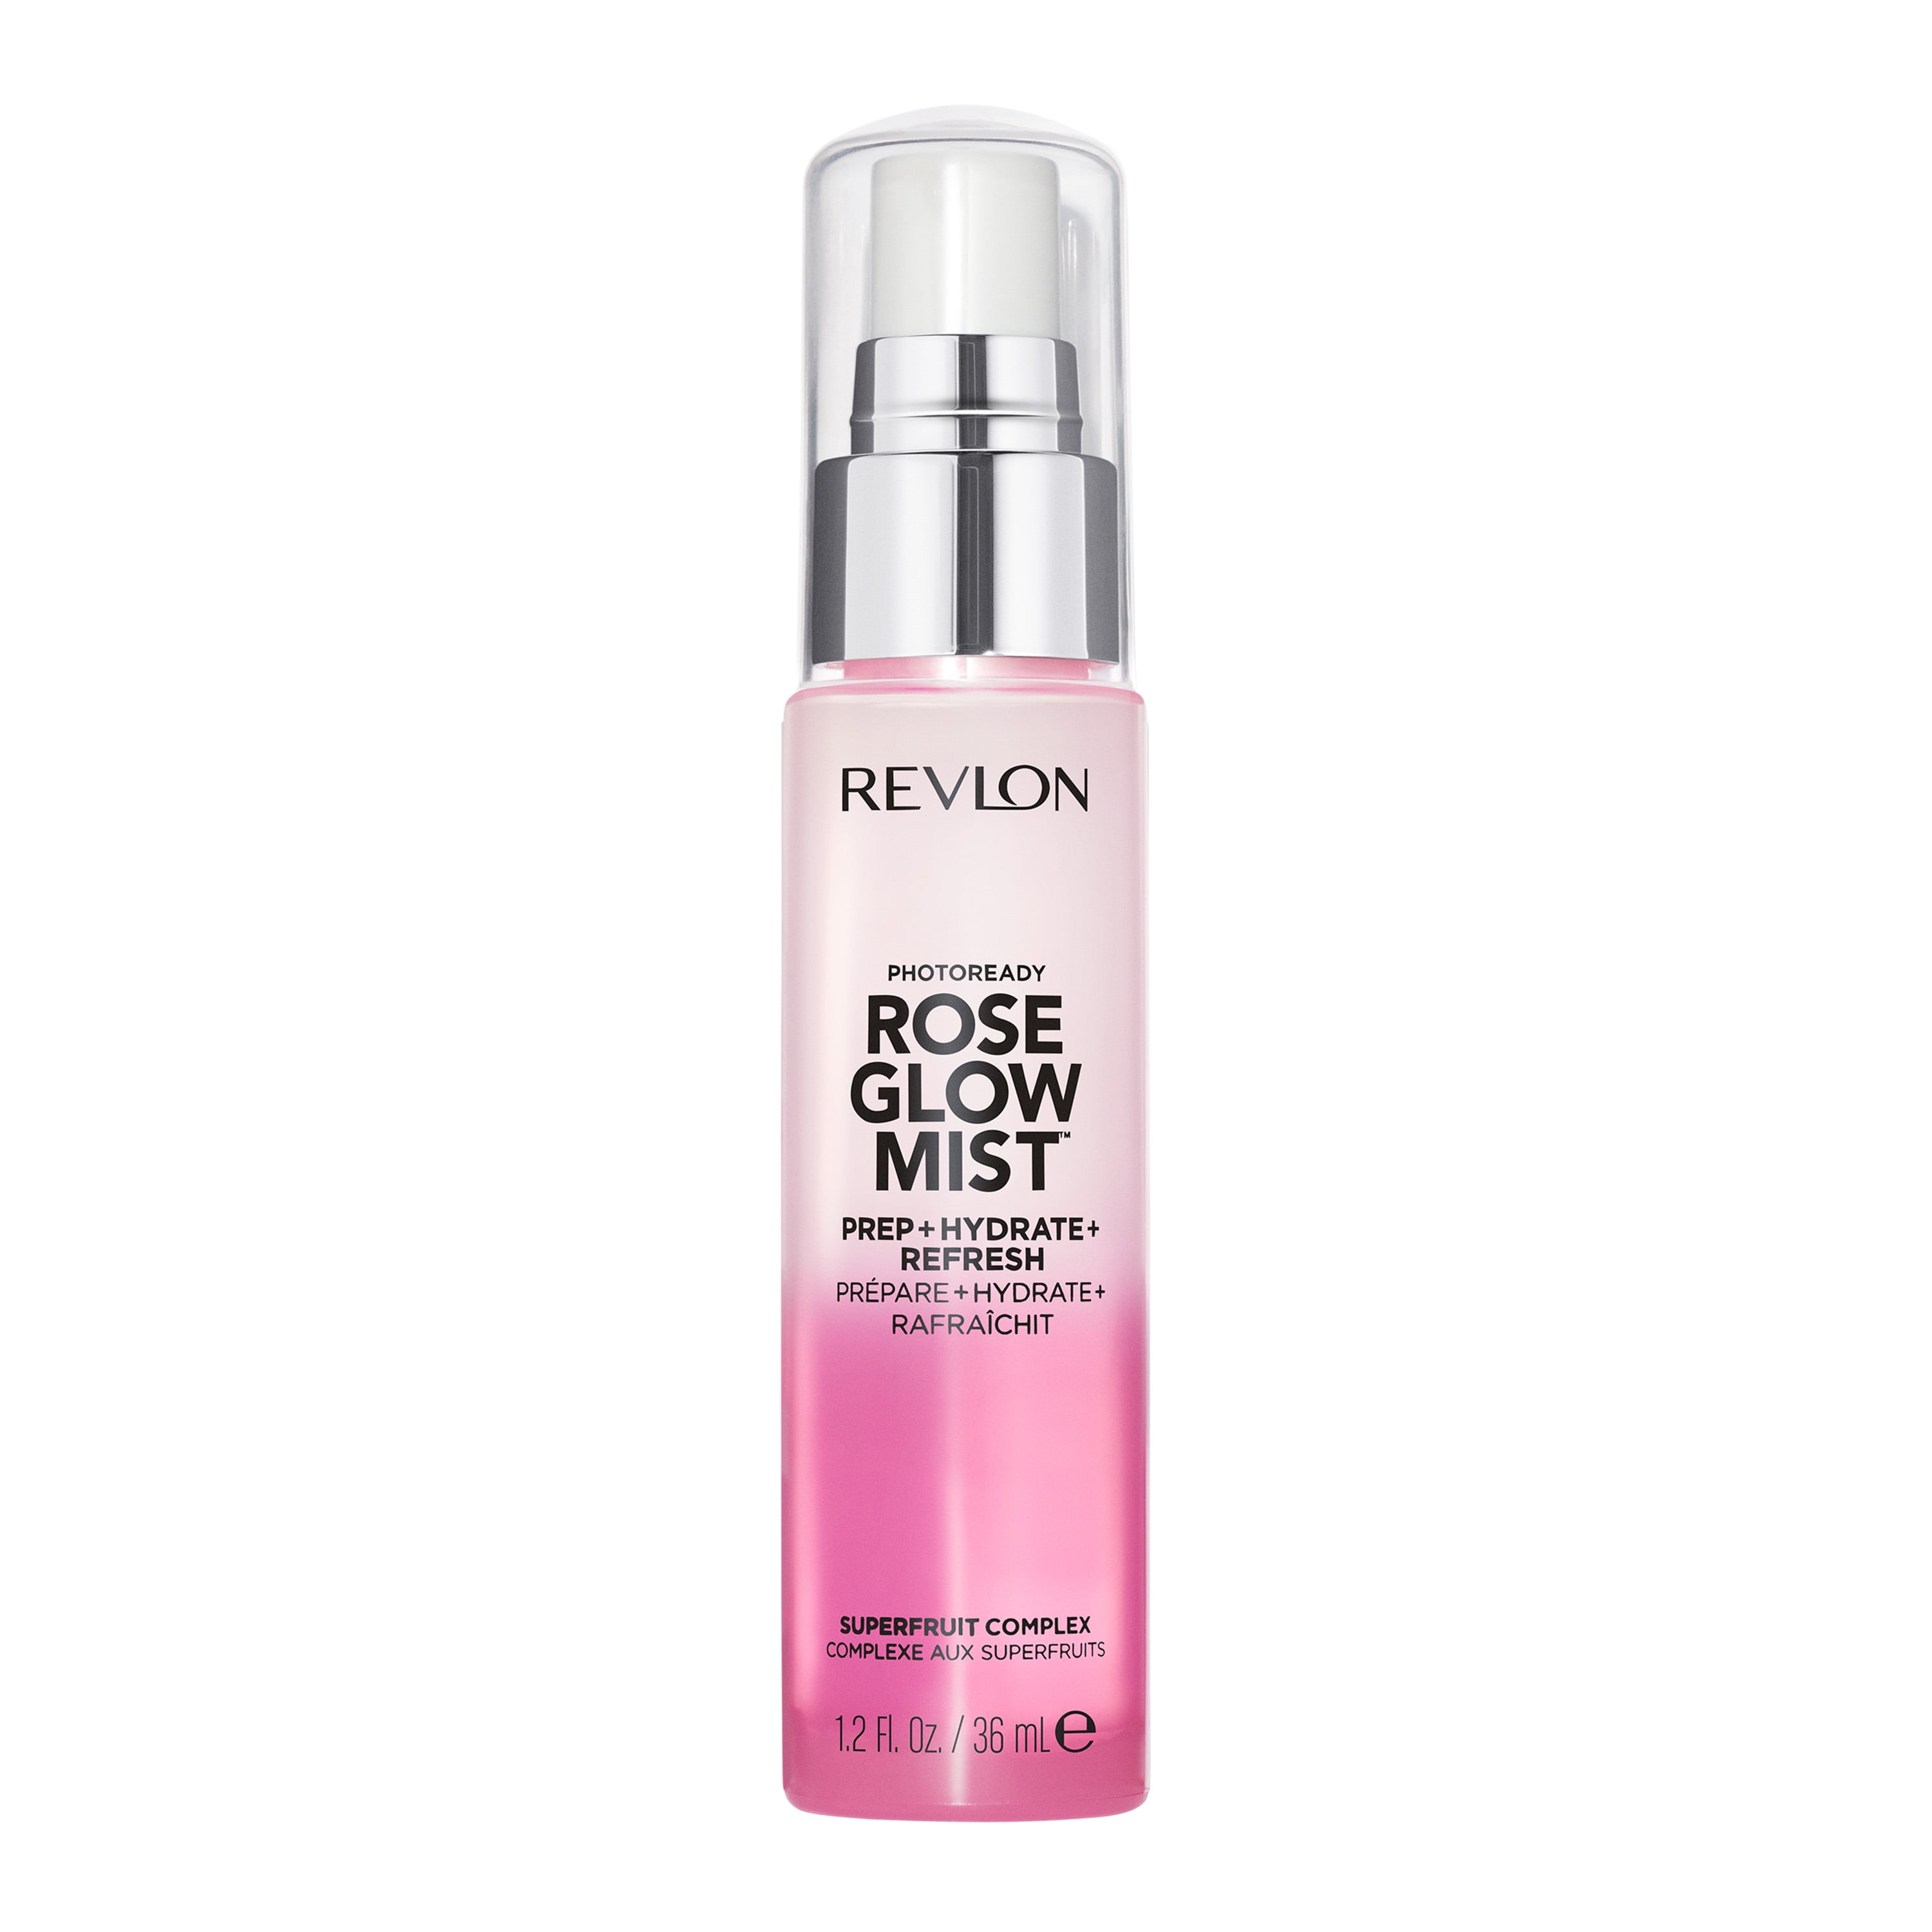 Revlon PhotoReady Rose Glow Mist Face Primer, Prep ...
